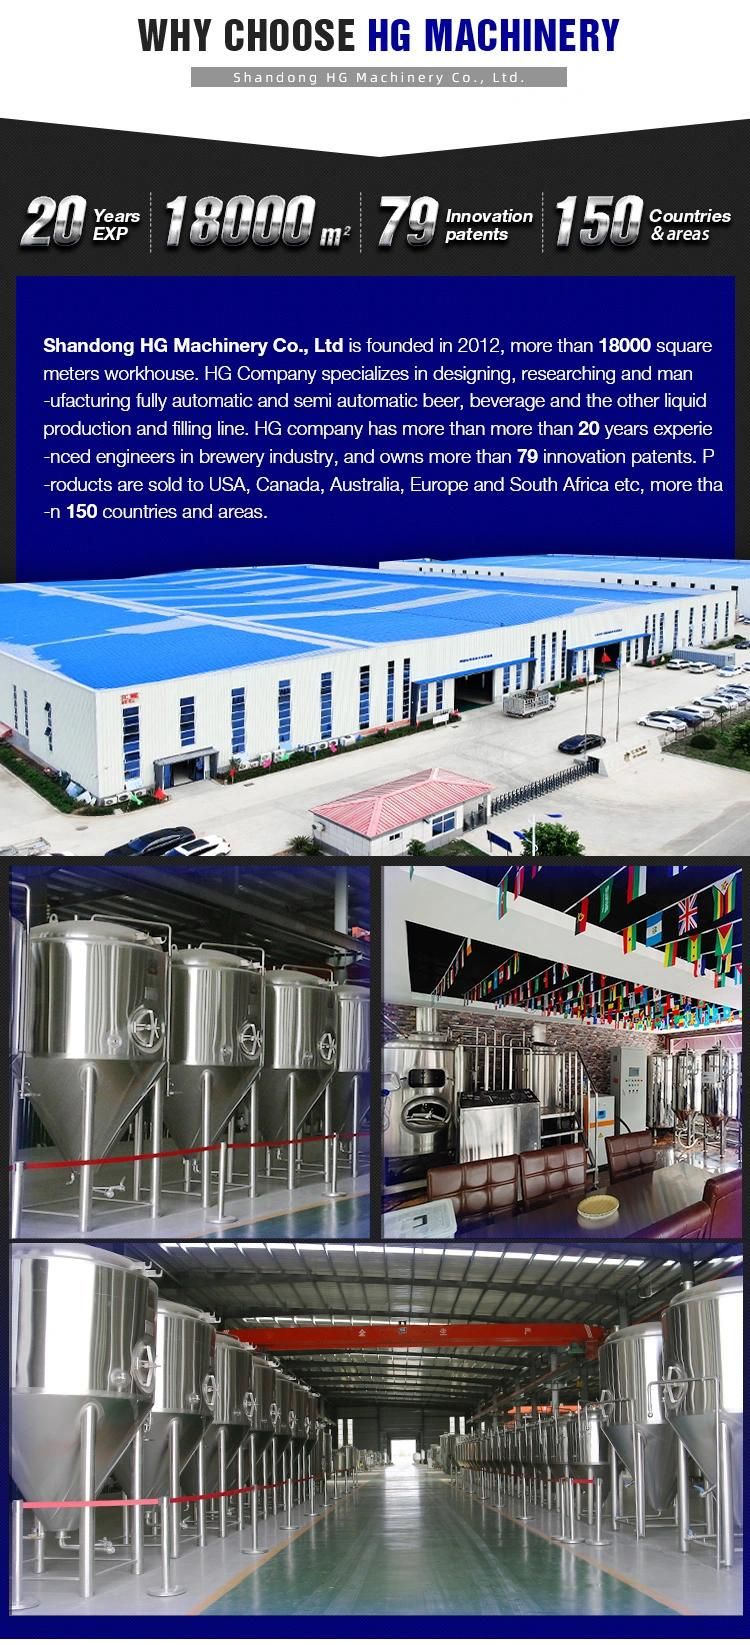 Complete 1000 Liter Brewhouse Brewery Beer Making Machine Industrial Brewing Equipment